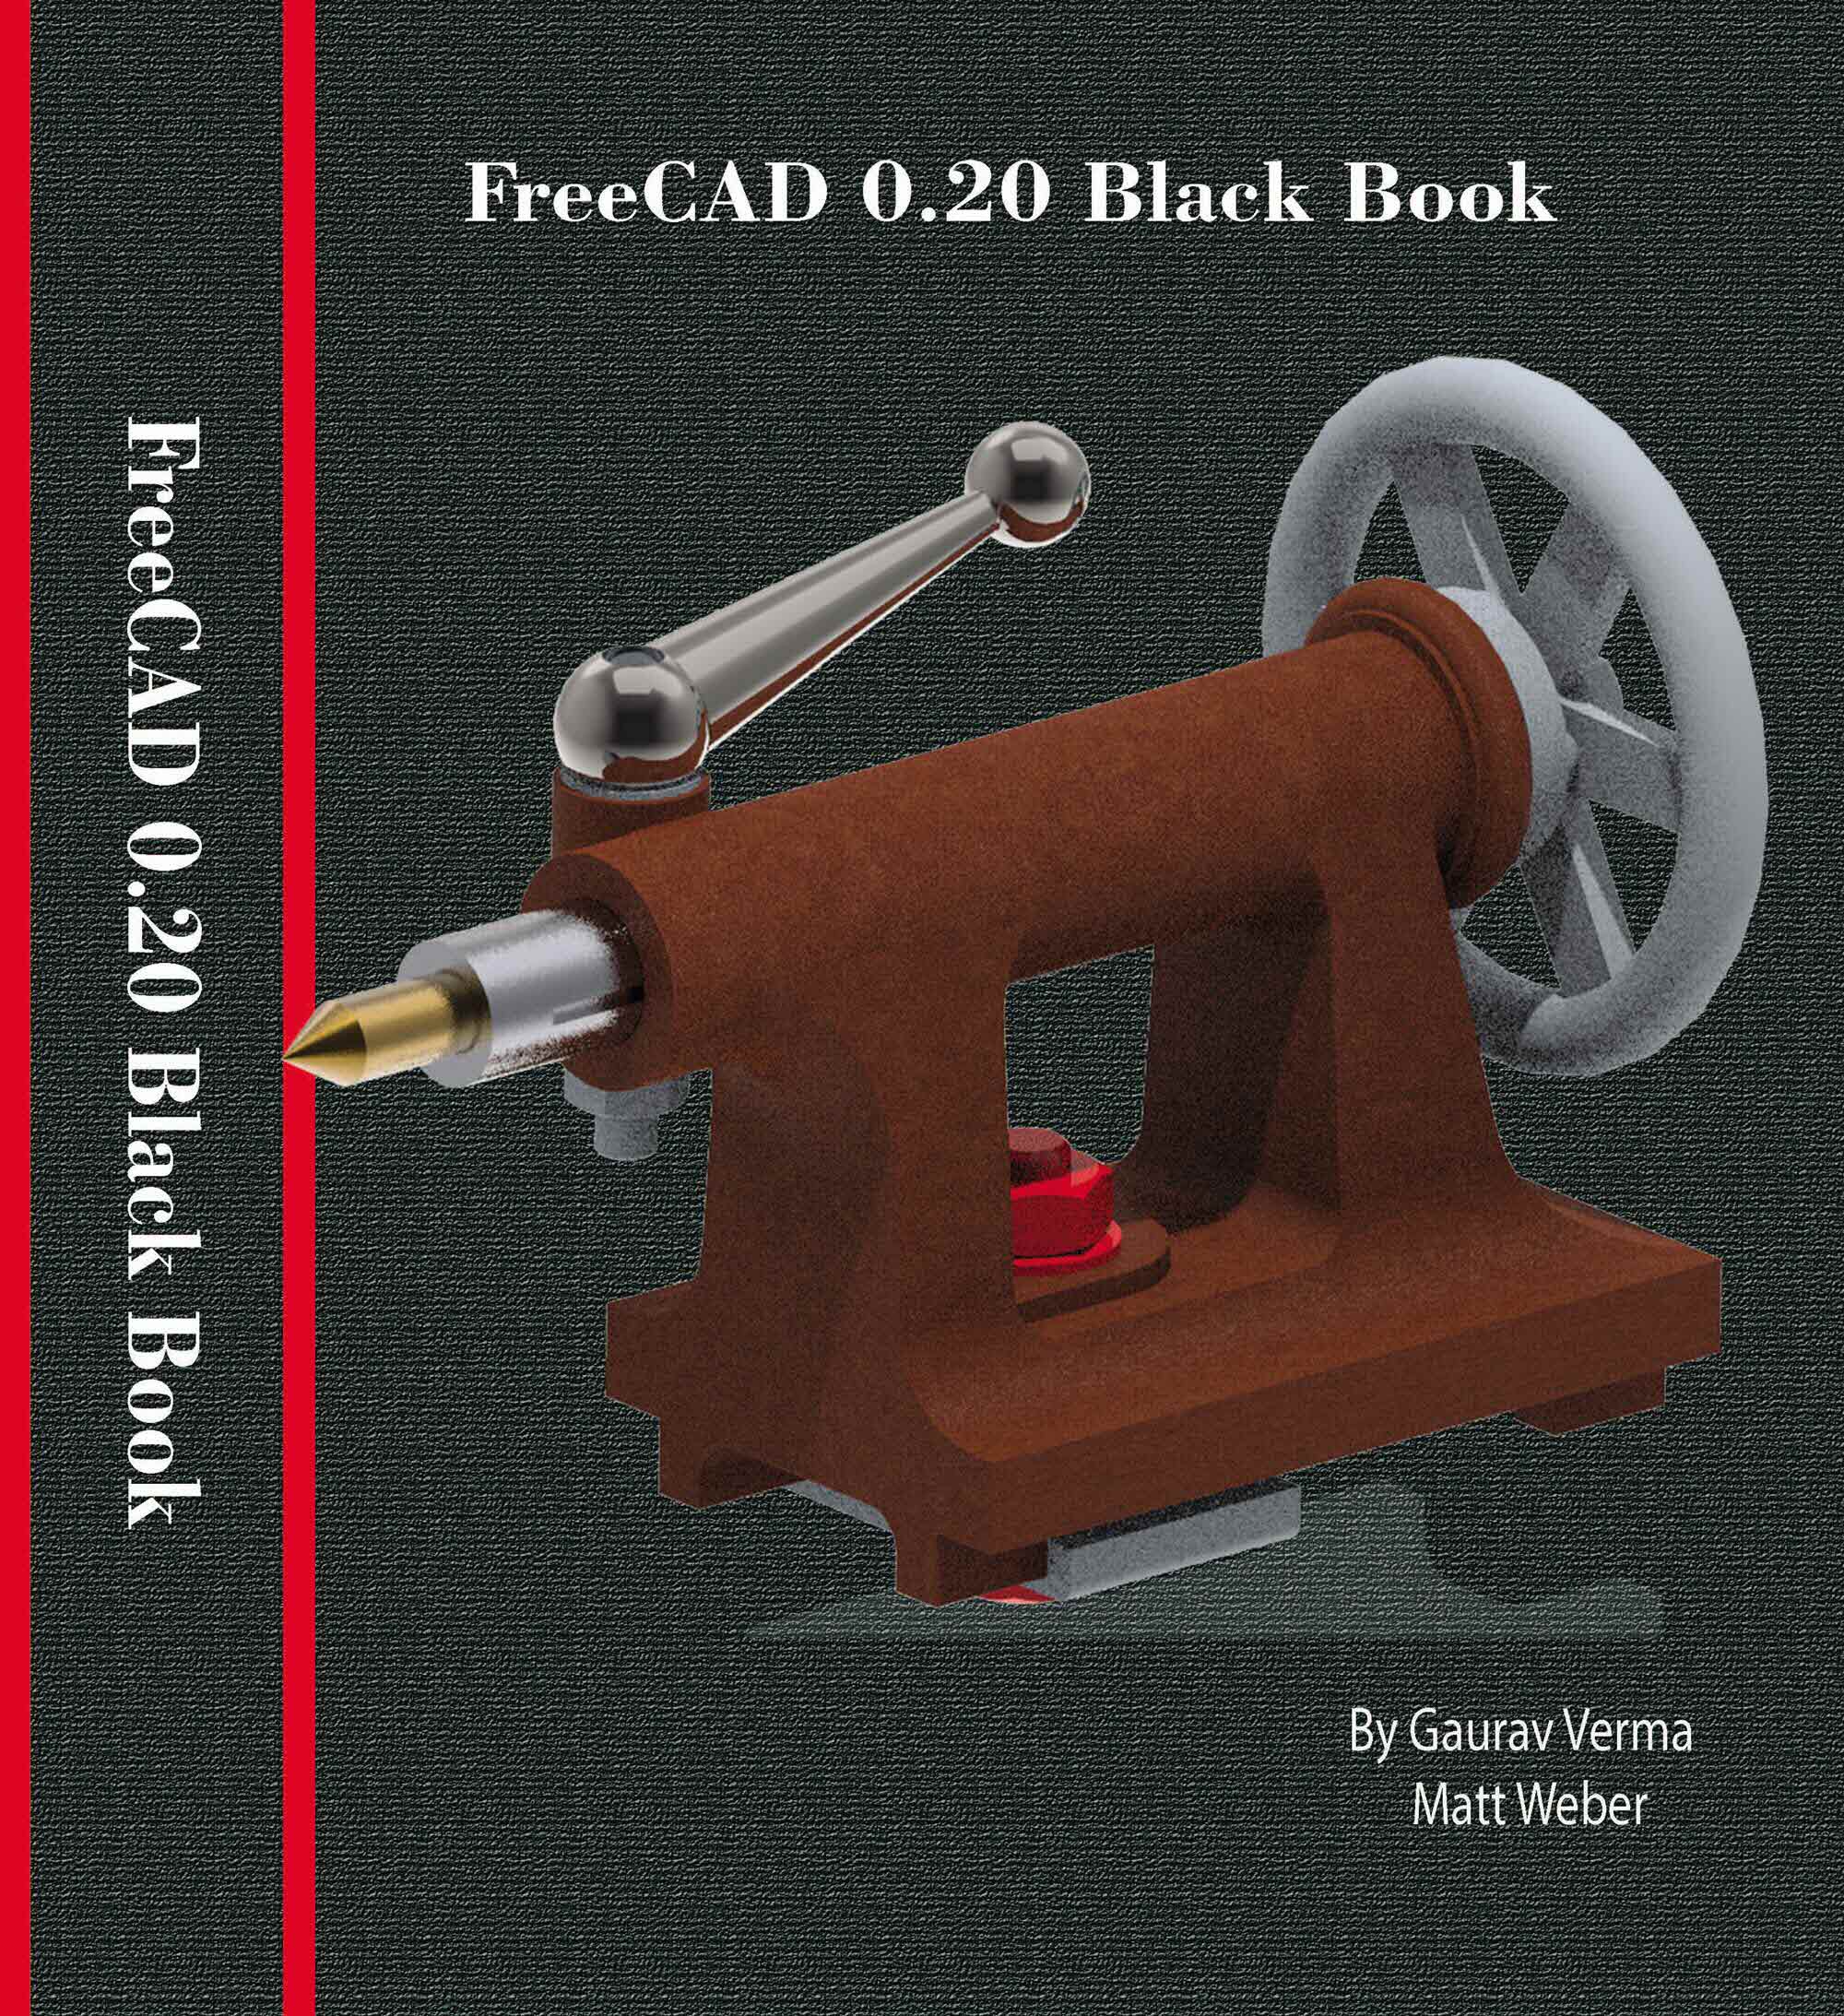 freecad 0.20 black book